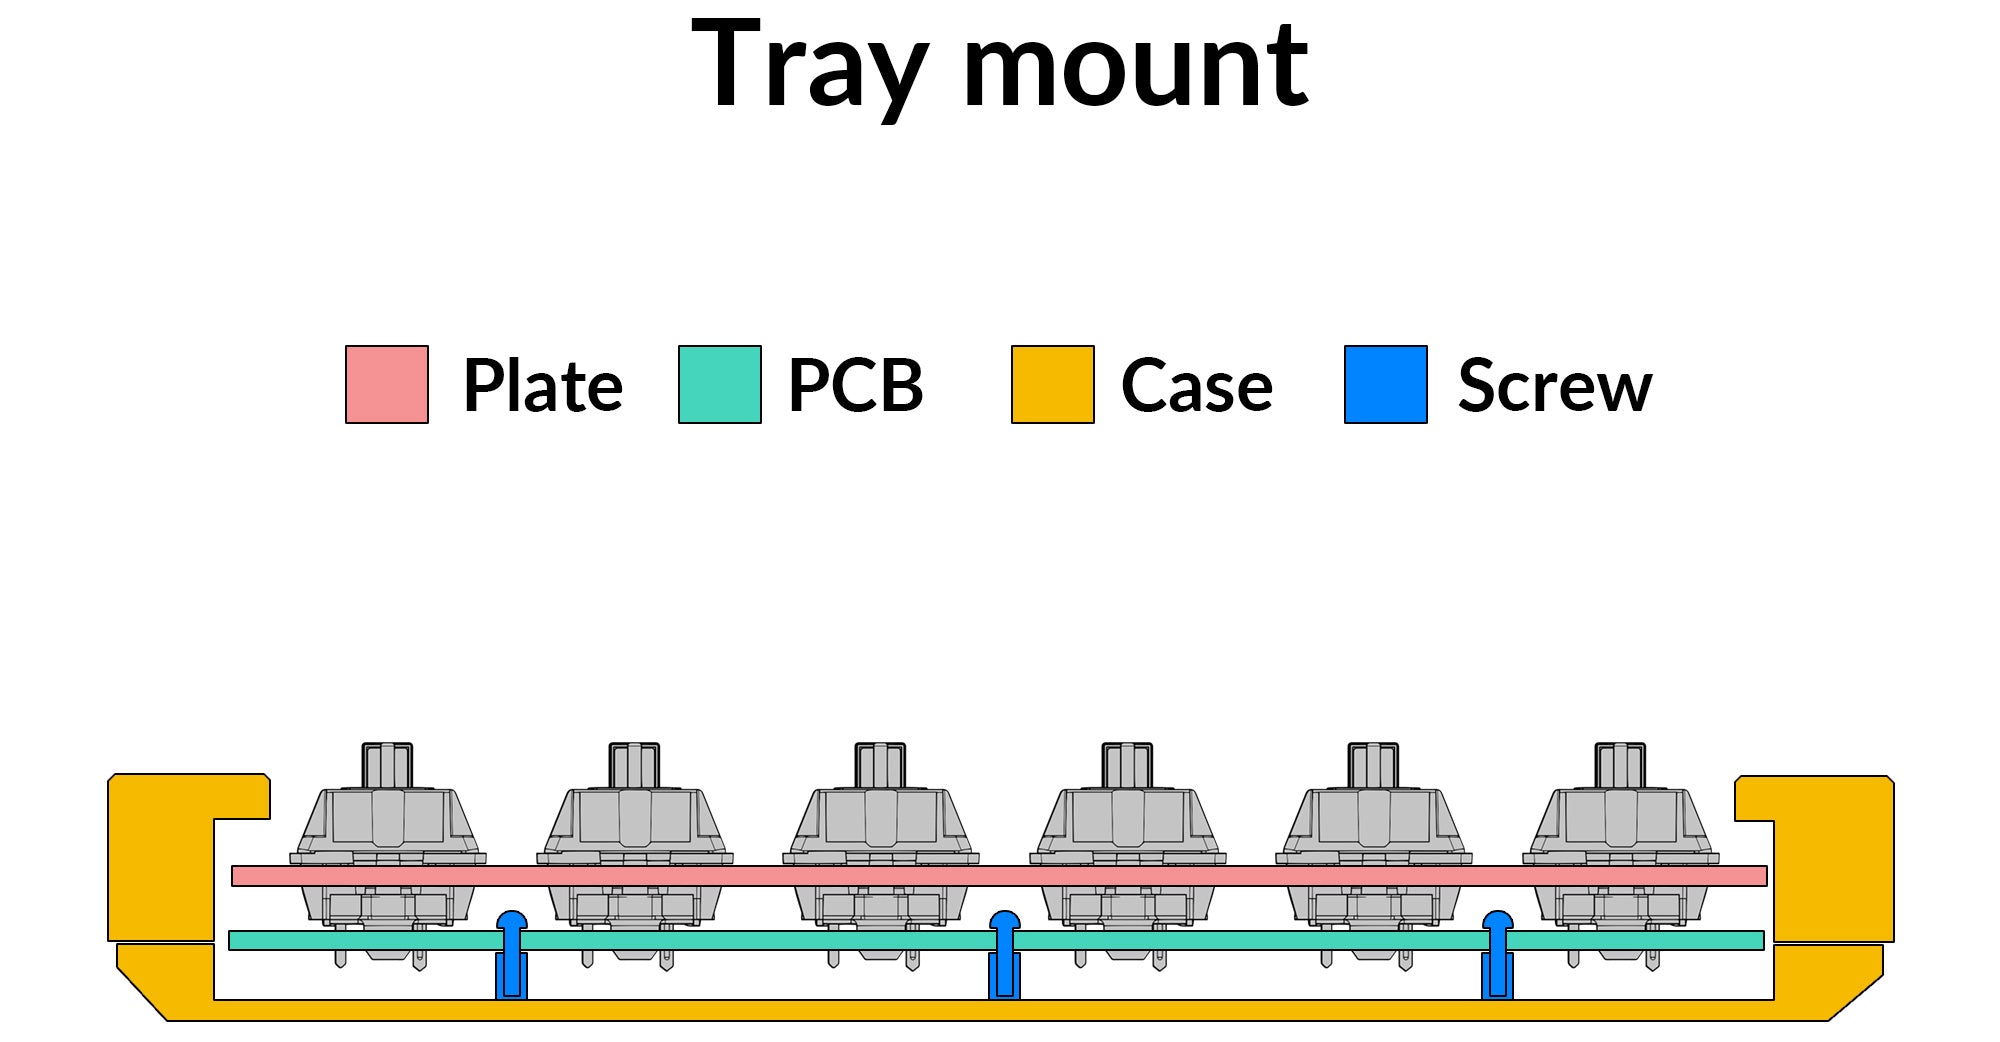 Tray mount